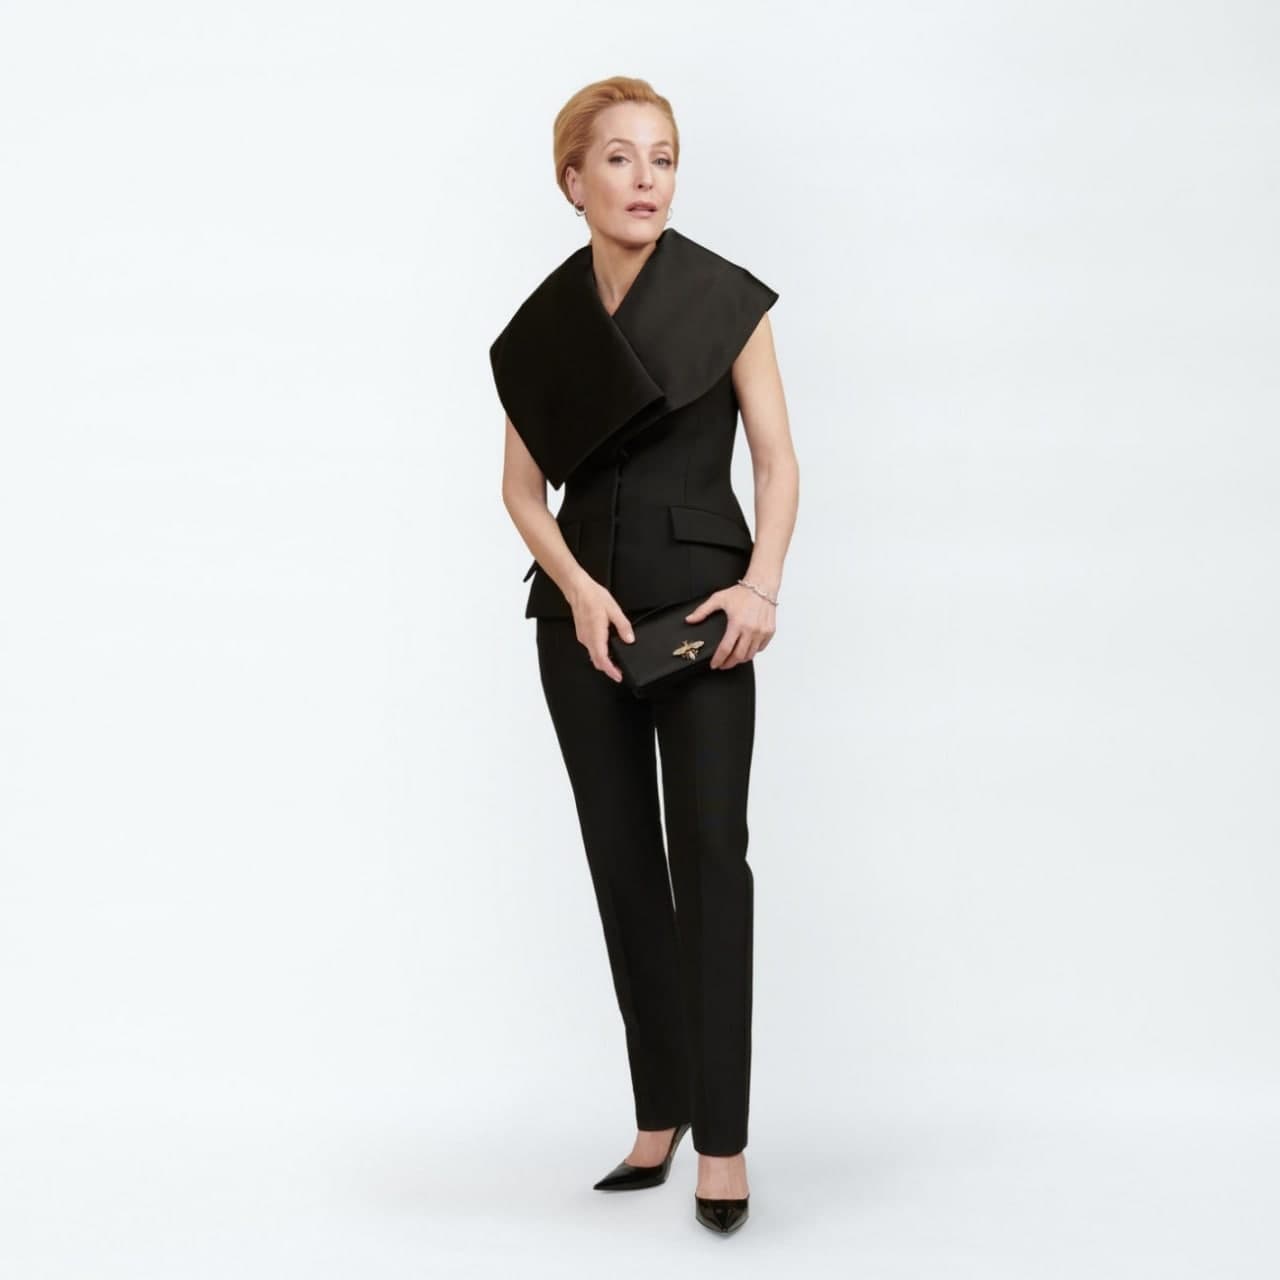 Жиллиан Андерсон — Dior модалар уйидан тикилган либосда